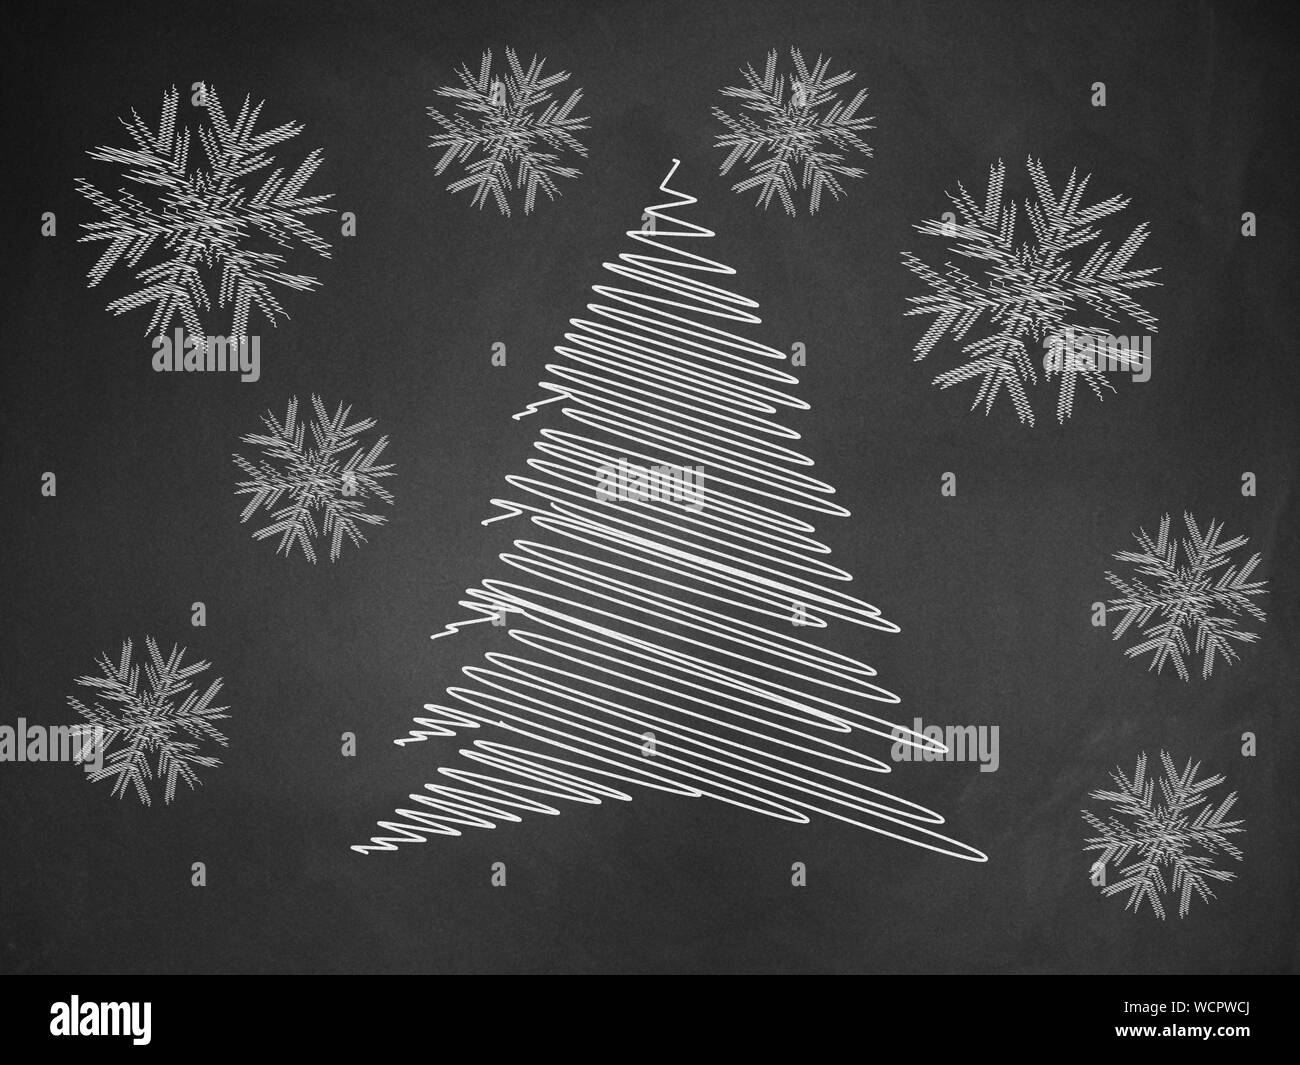 Illustration of abstract christmas tree chalk drawing Stock Photo - Alamy